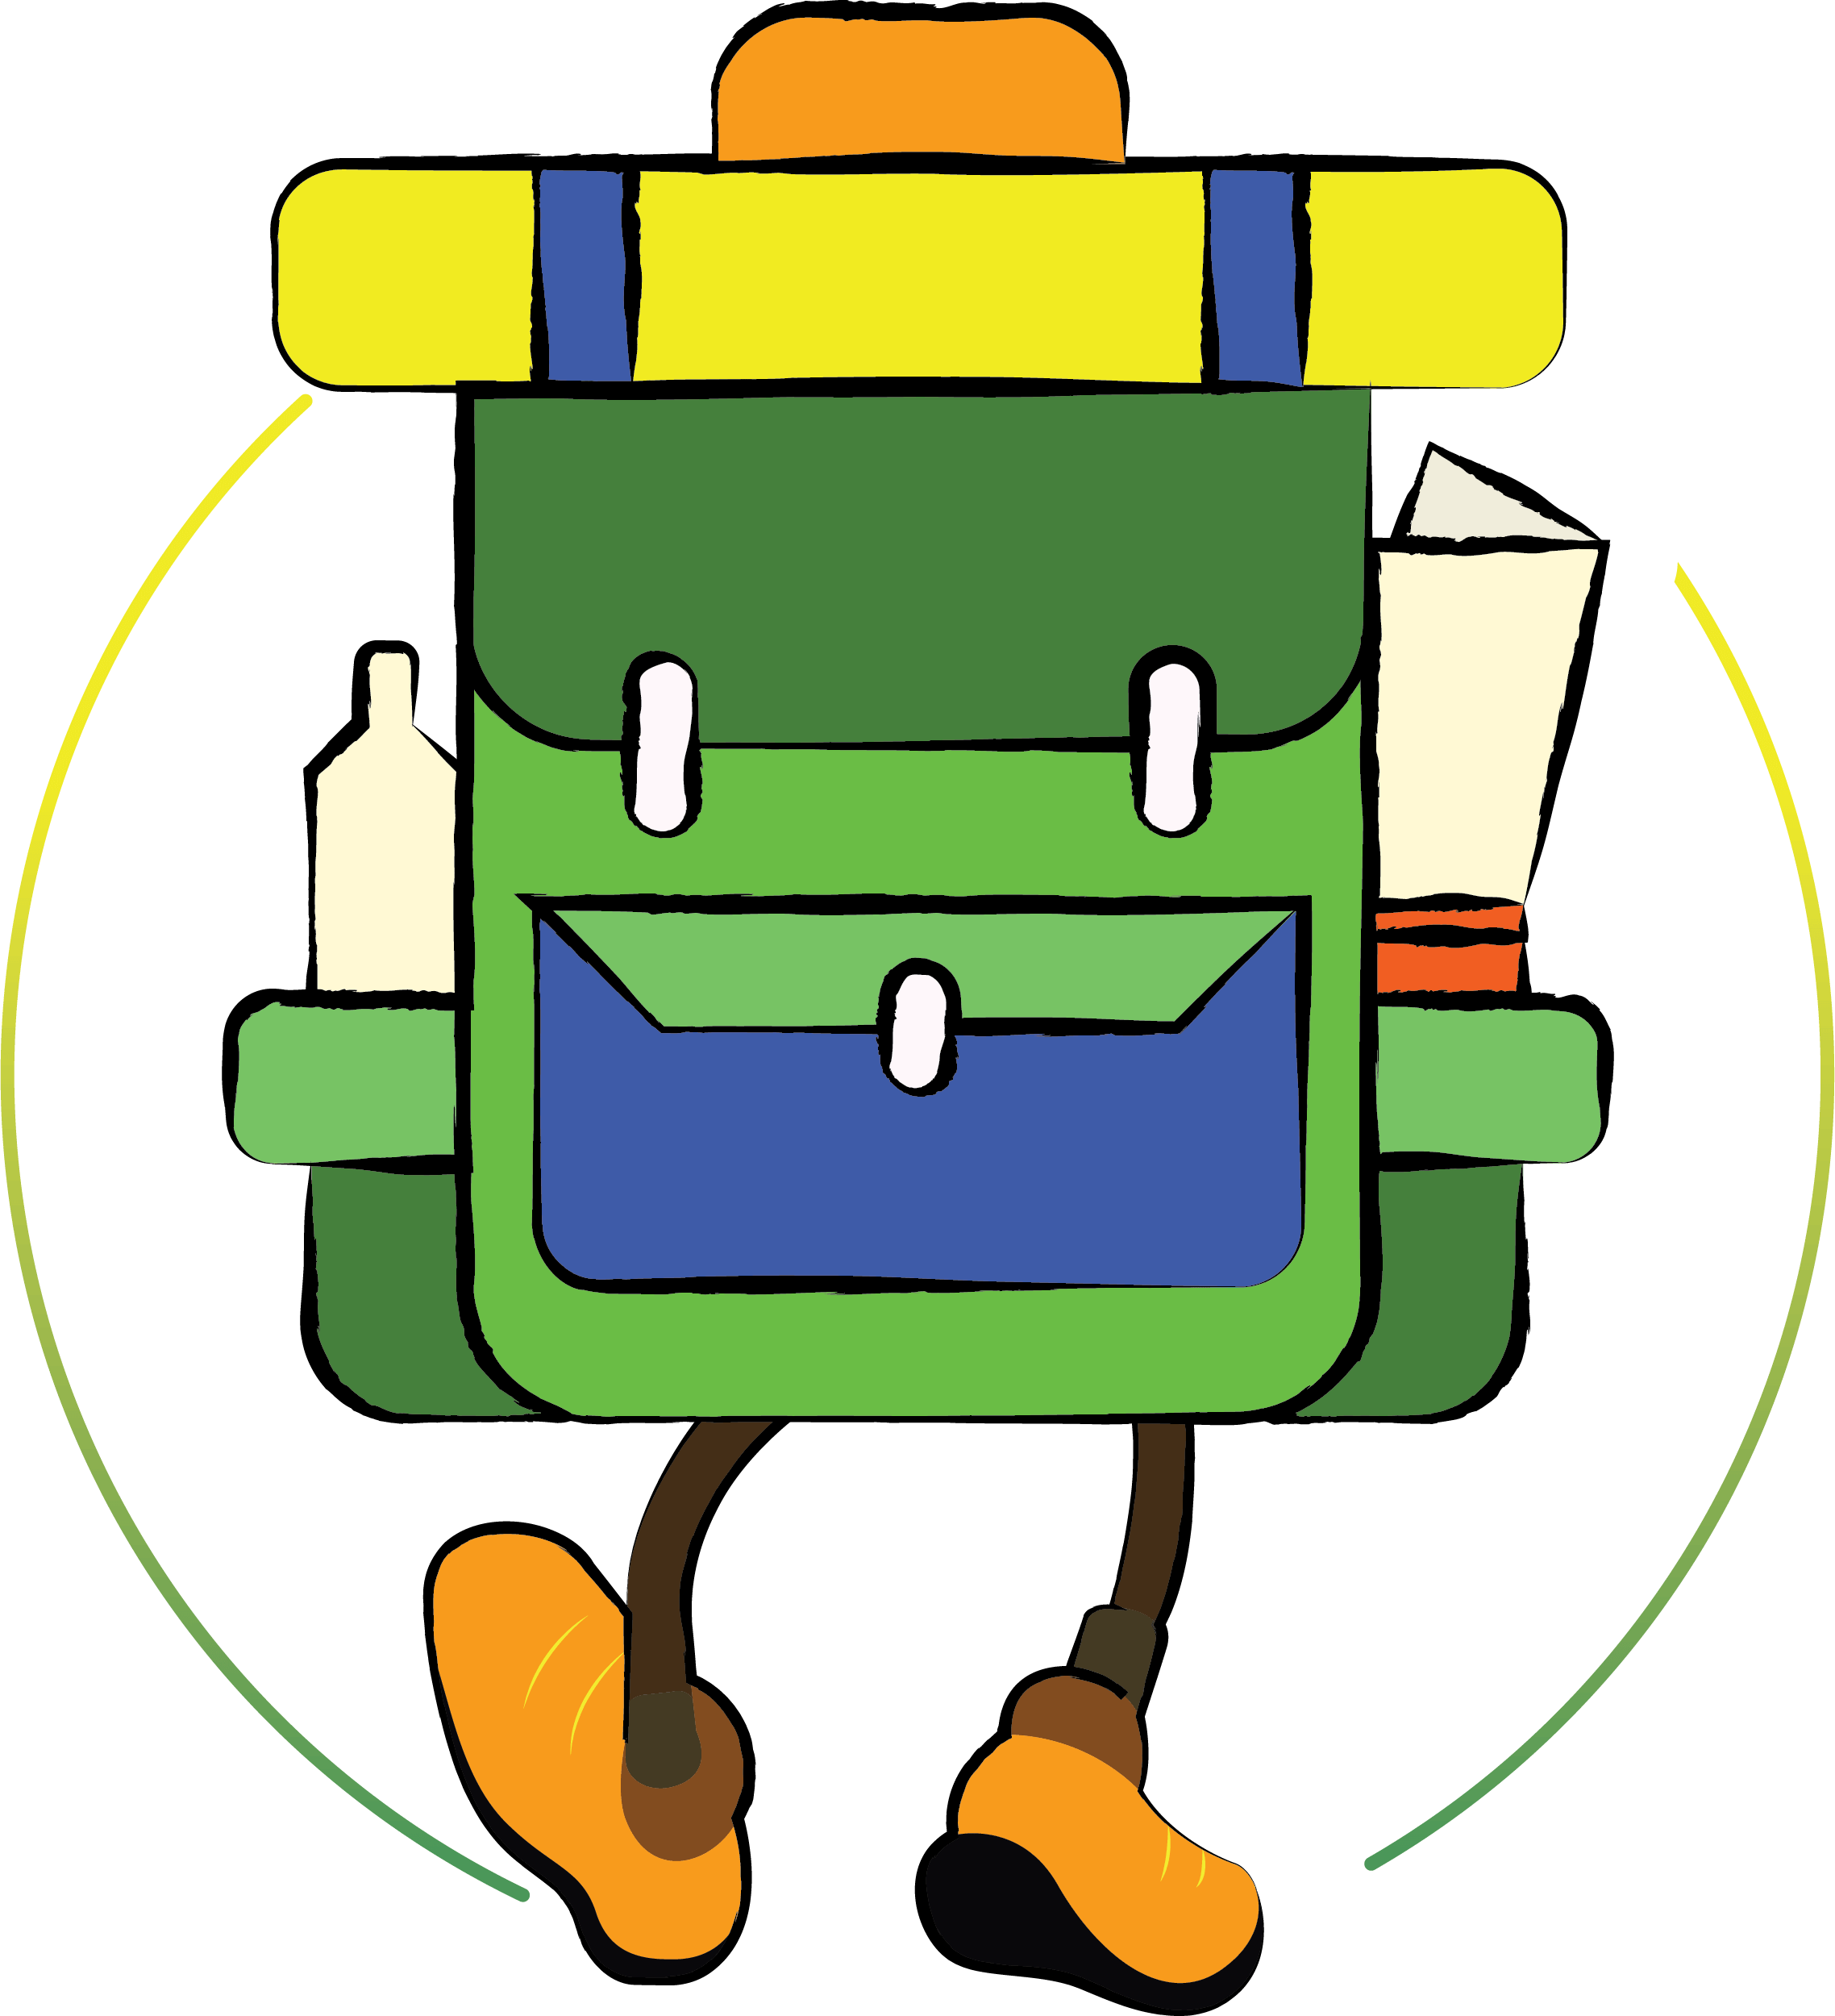 Travelling foot logo